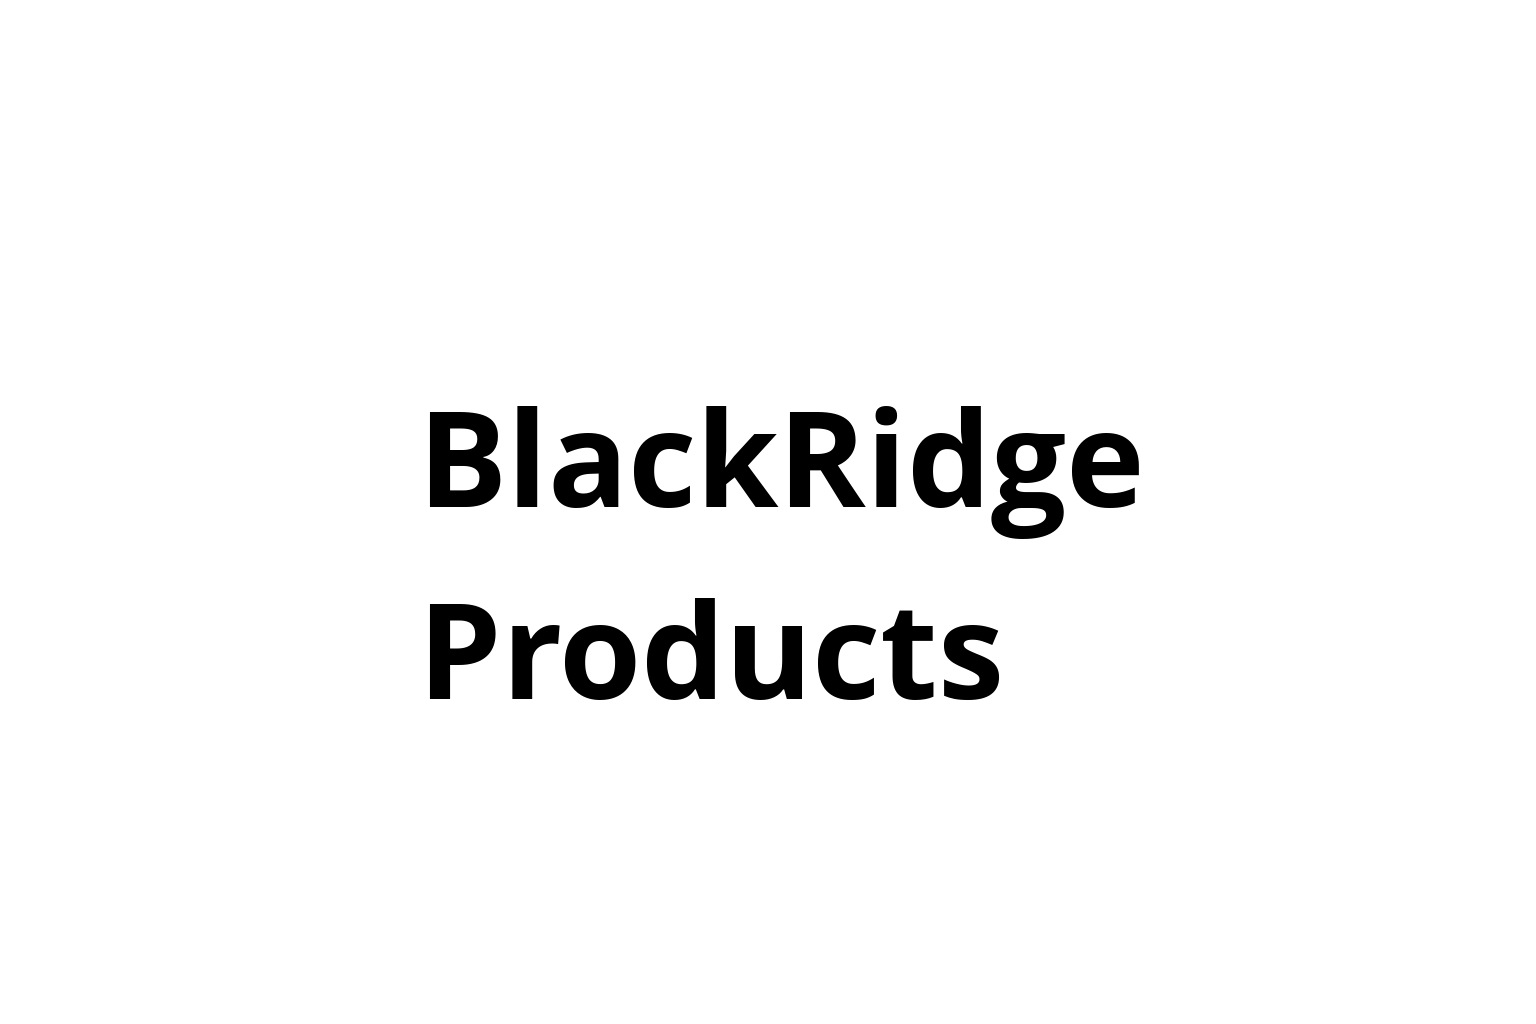 BlackRidge Products